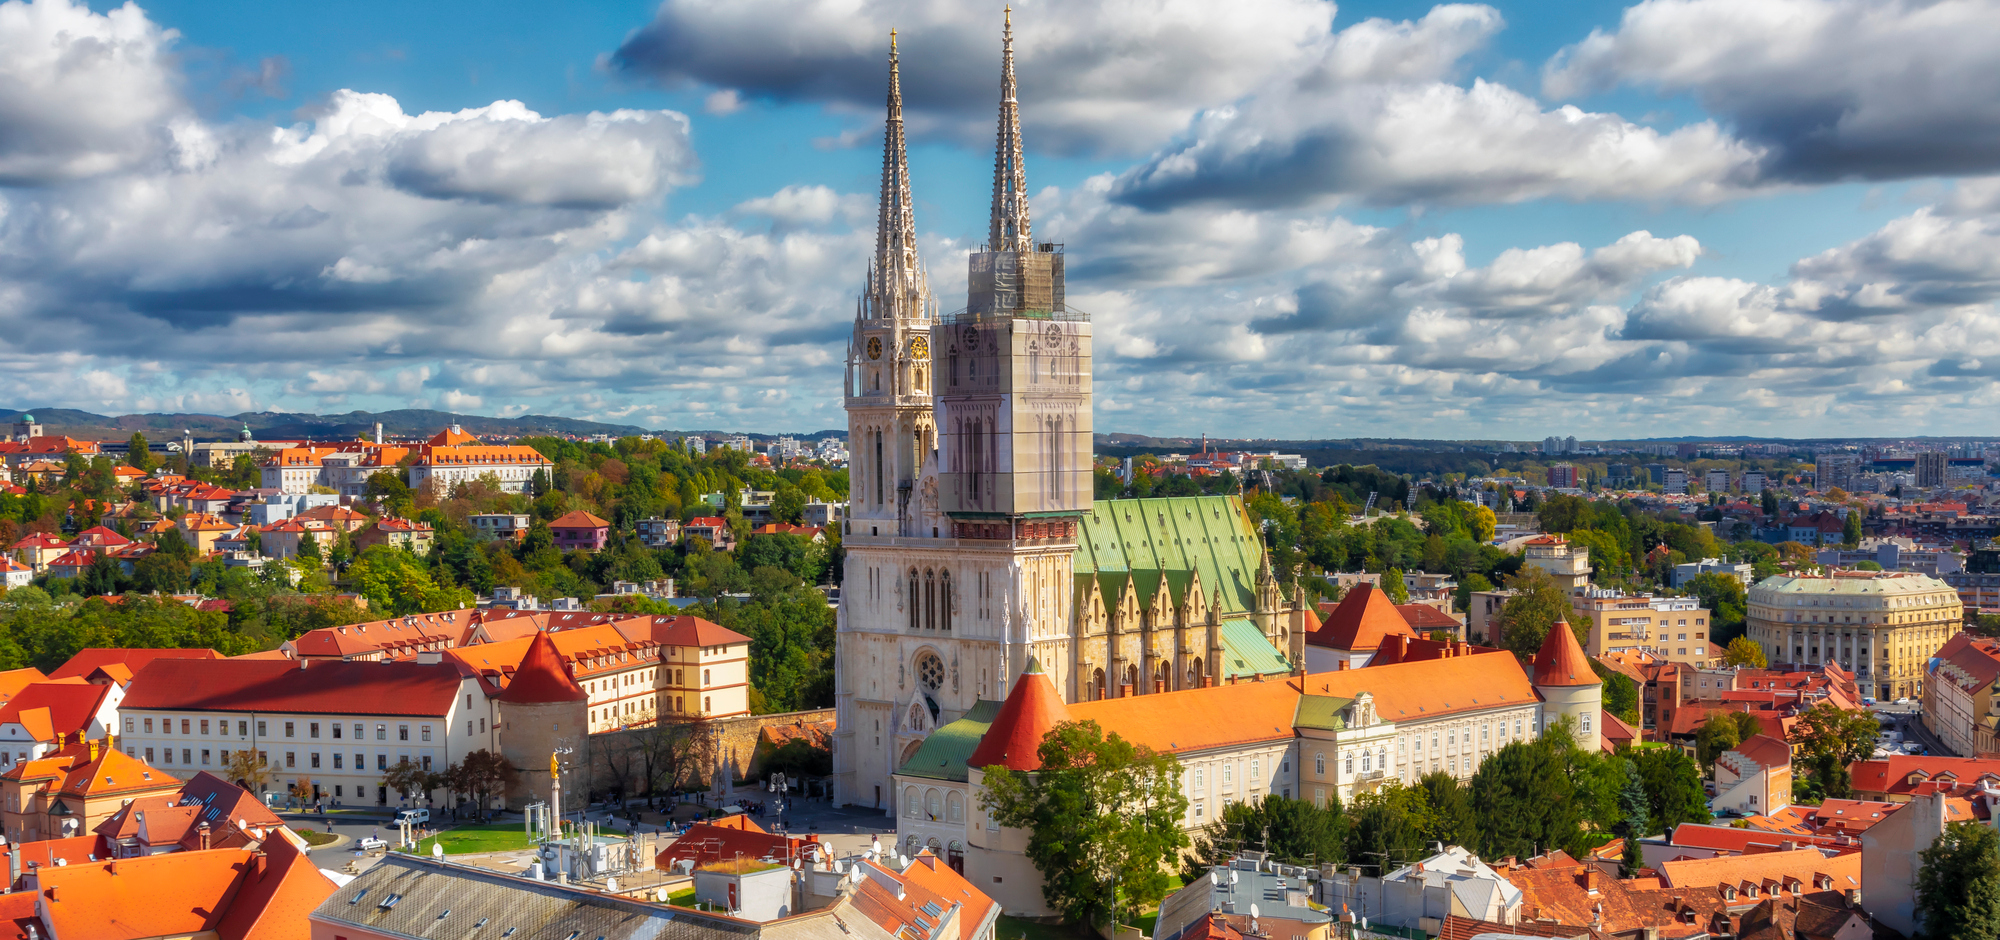 Croatia Zagreb Cathedral on Kaptol